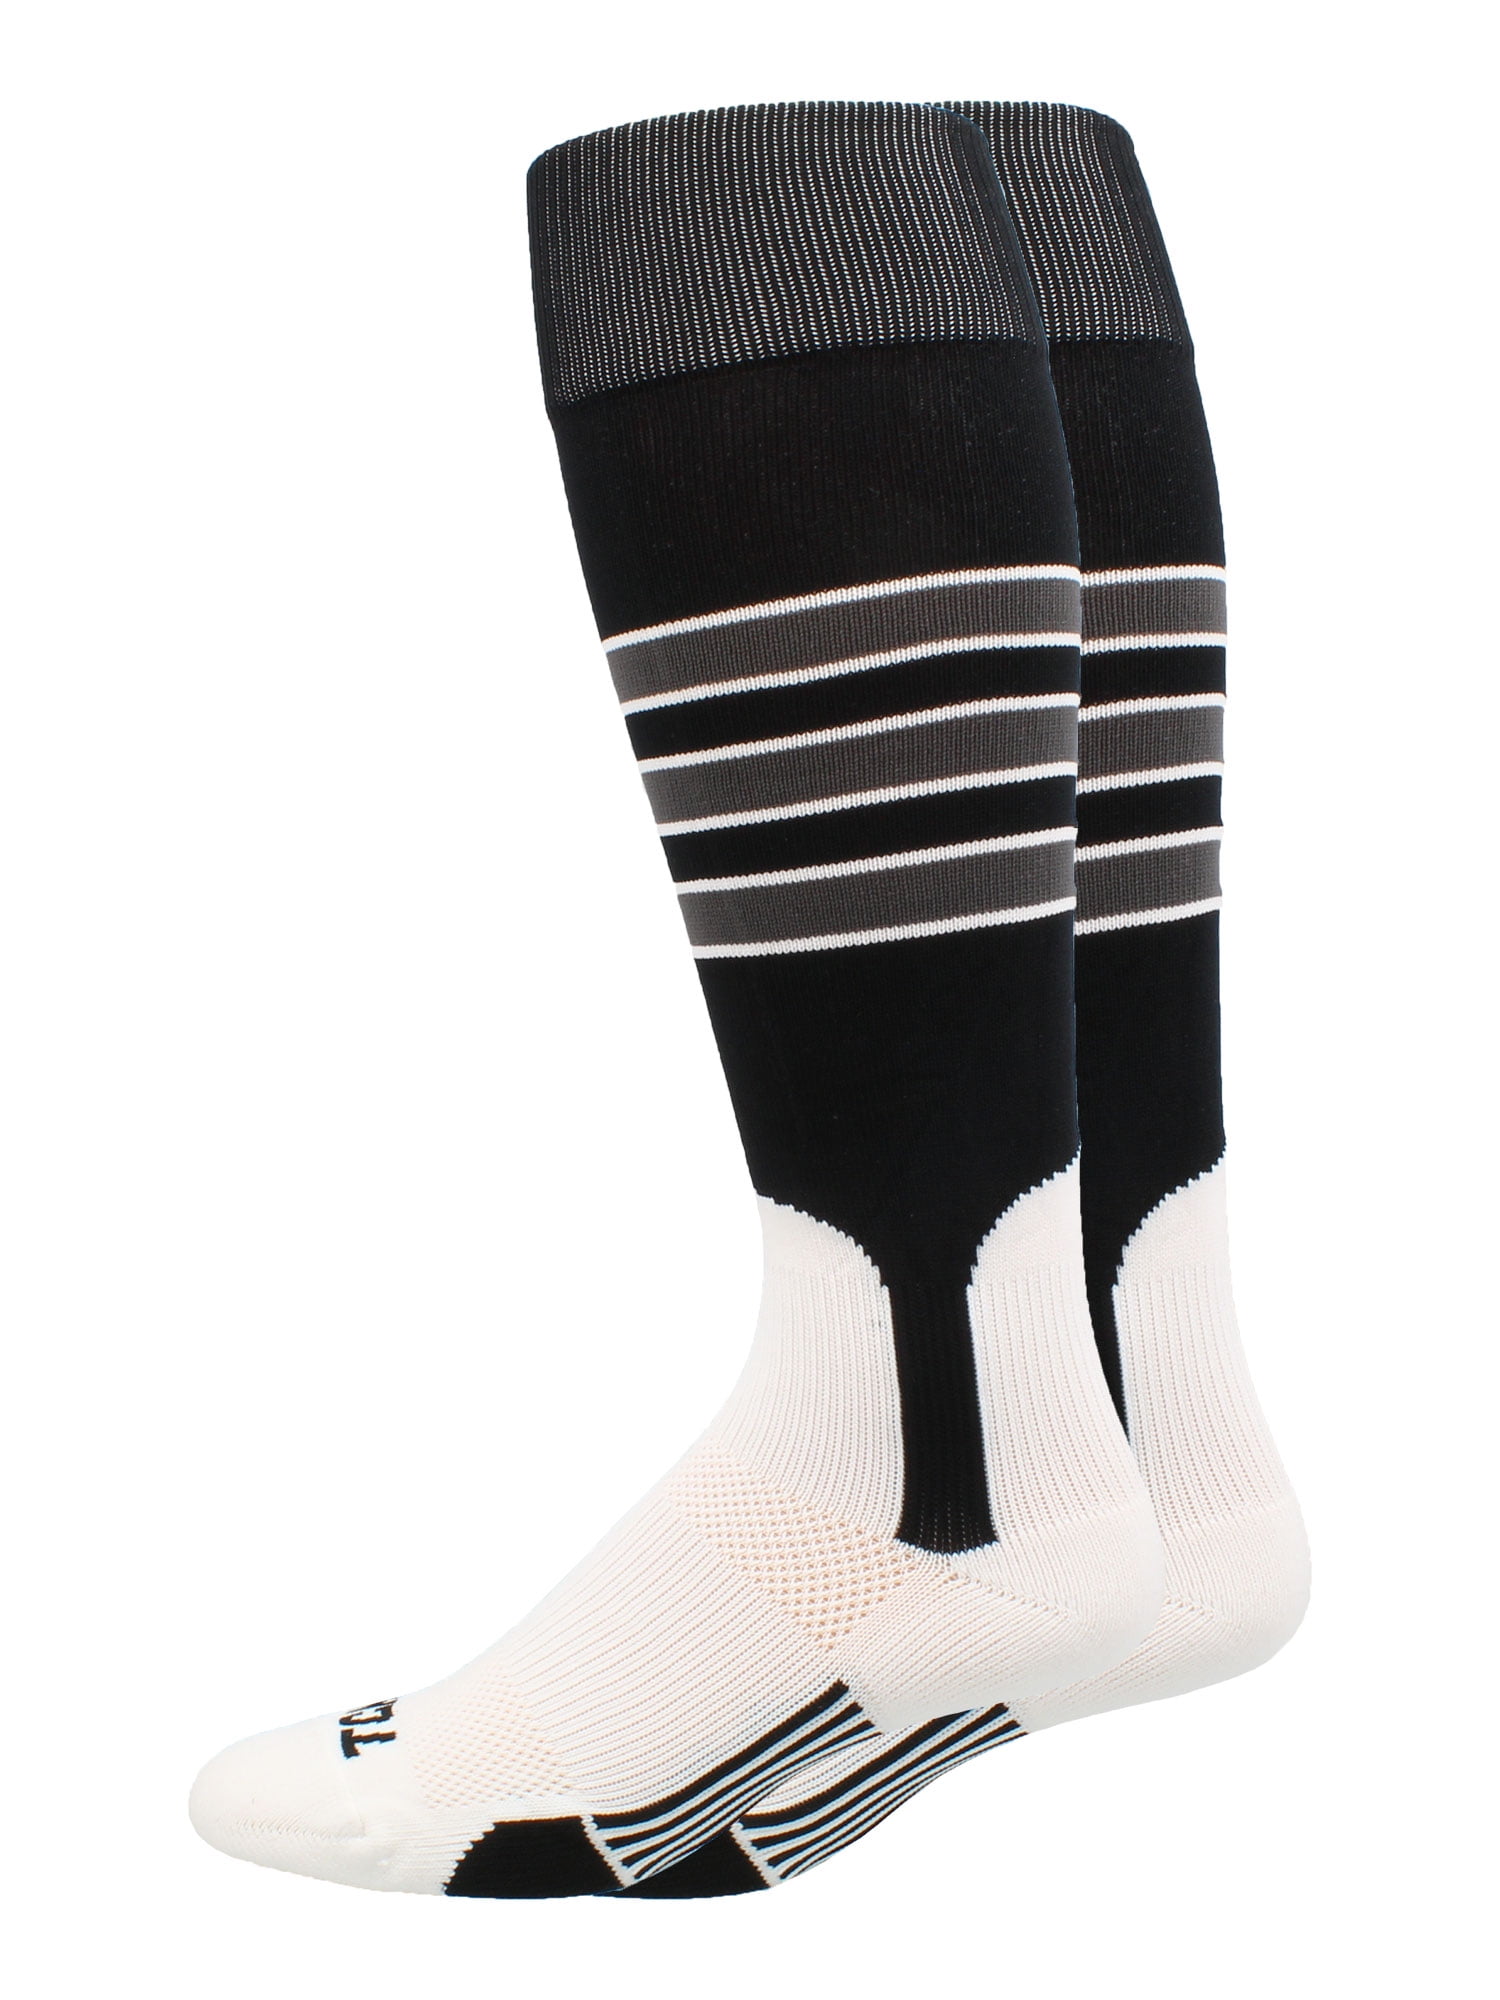 Baseball Stirrup Socks 3 Stripe (Black/Graphite/White, Large) - Black ...